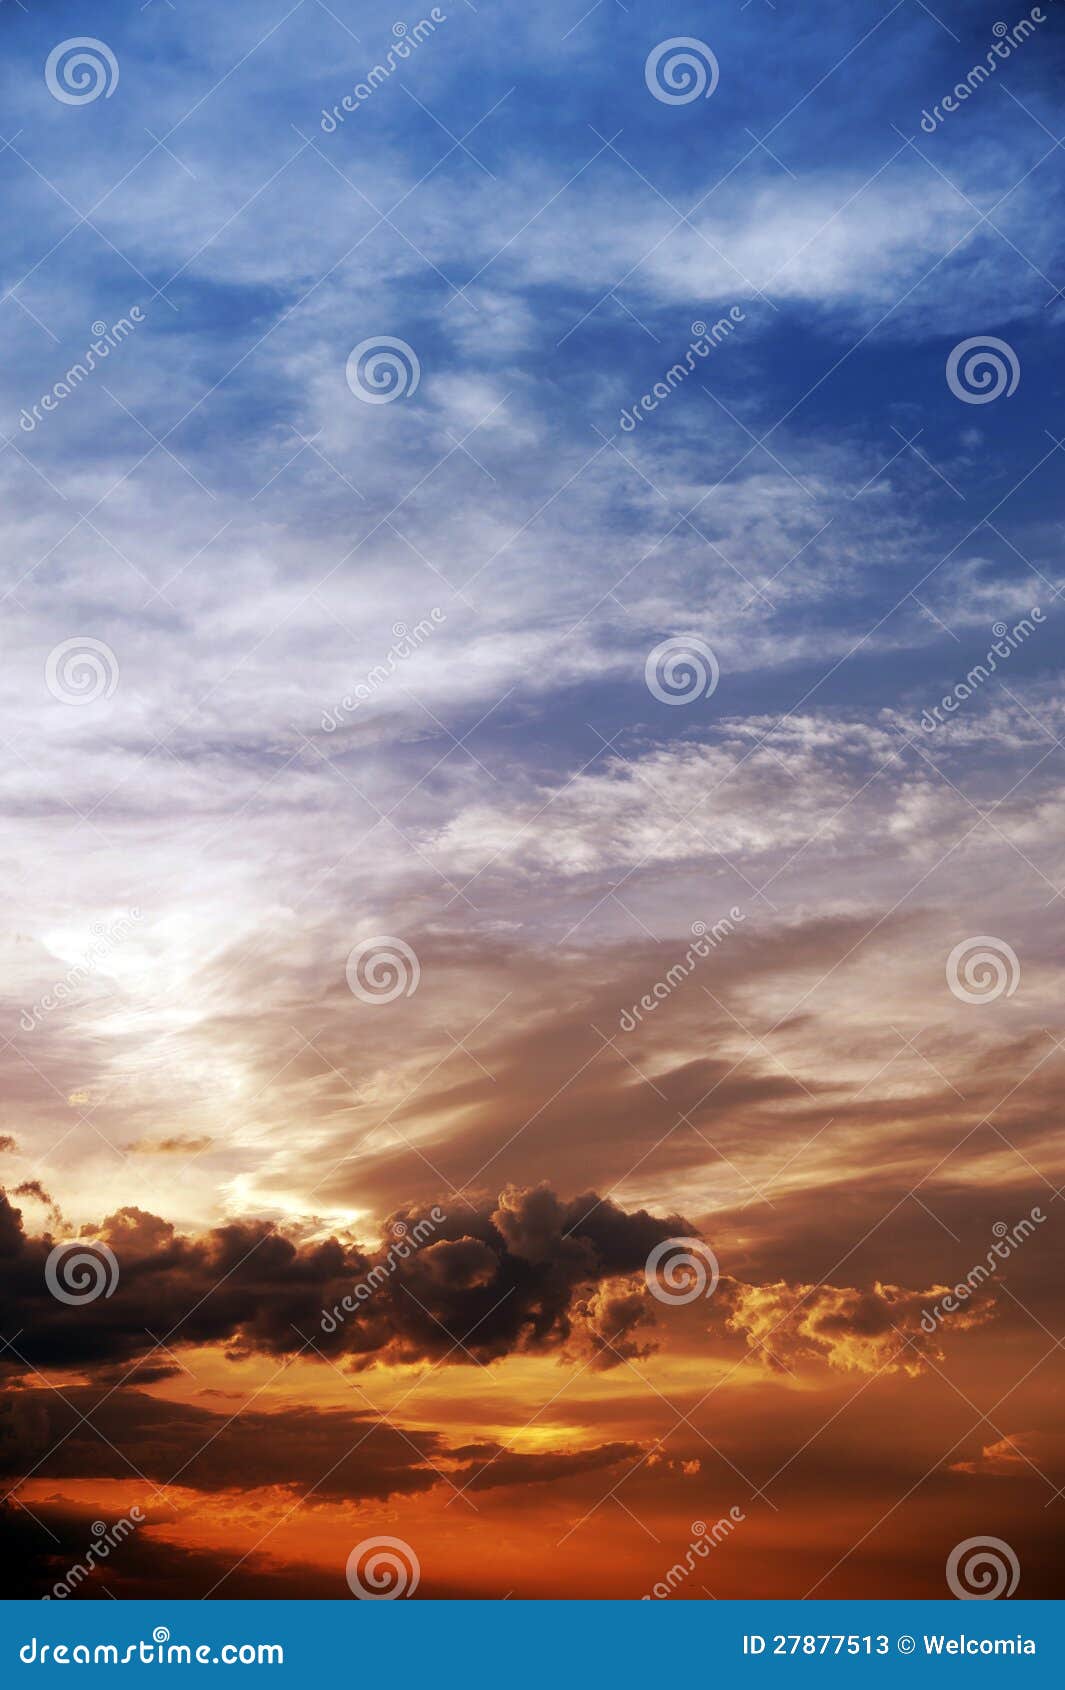 sky vertical background